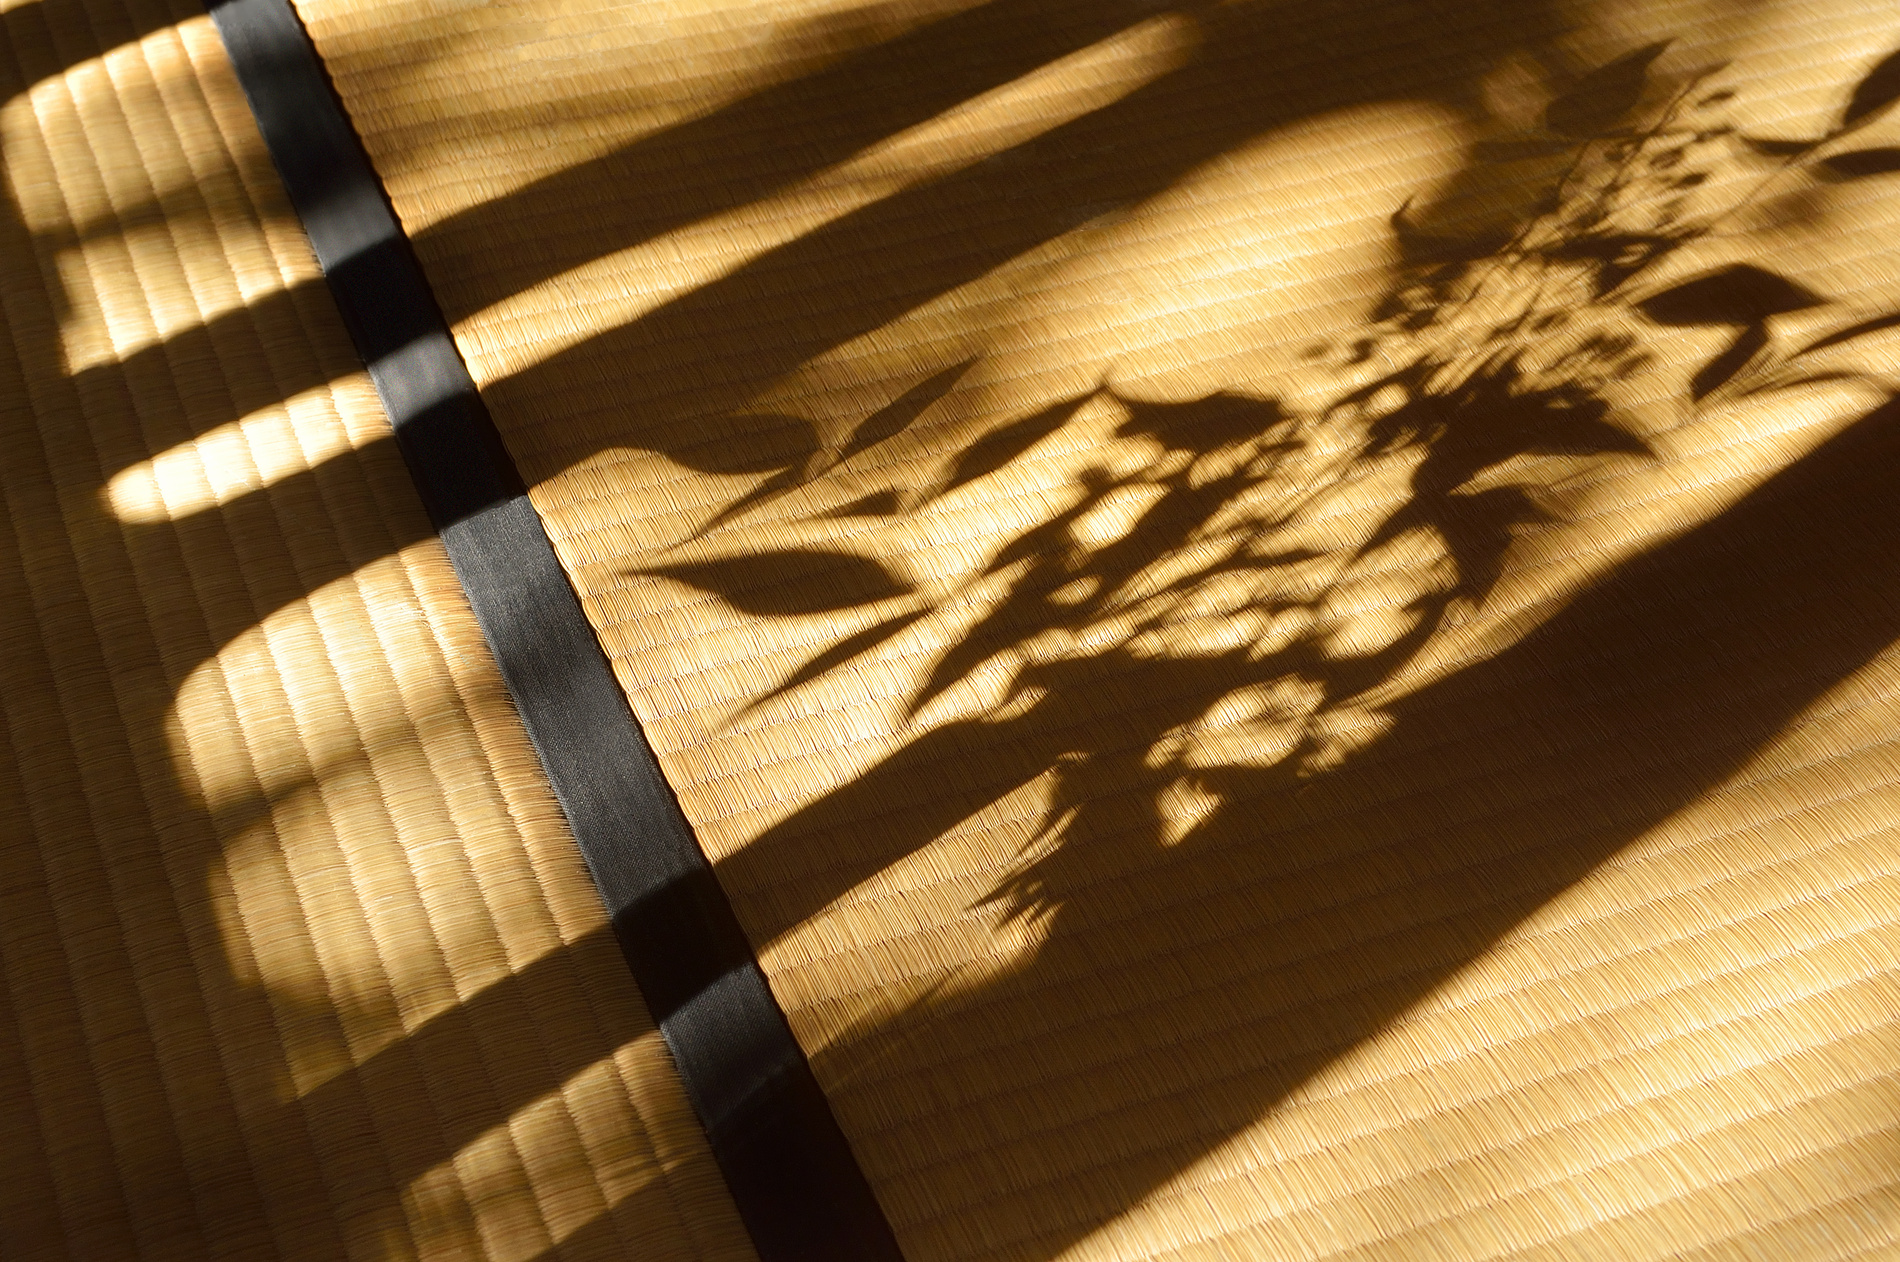 Shadow on the Tatami Mat